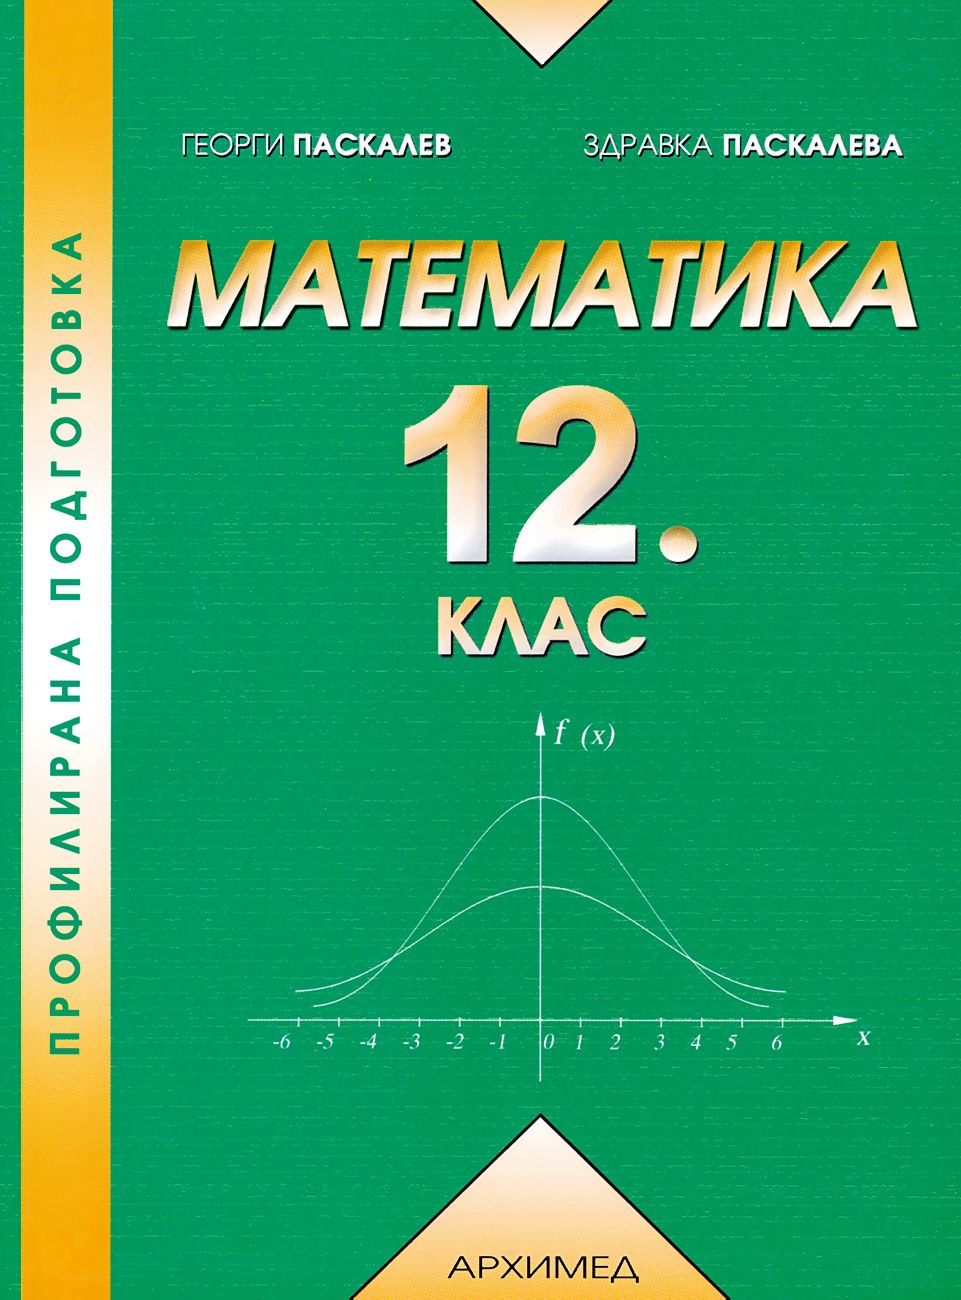 Учебник по математике языку 6. Математика 12 класс. Математика 12 класс учебник. Высшая математика 12 класс. Учебник за 12 класс.